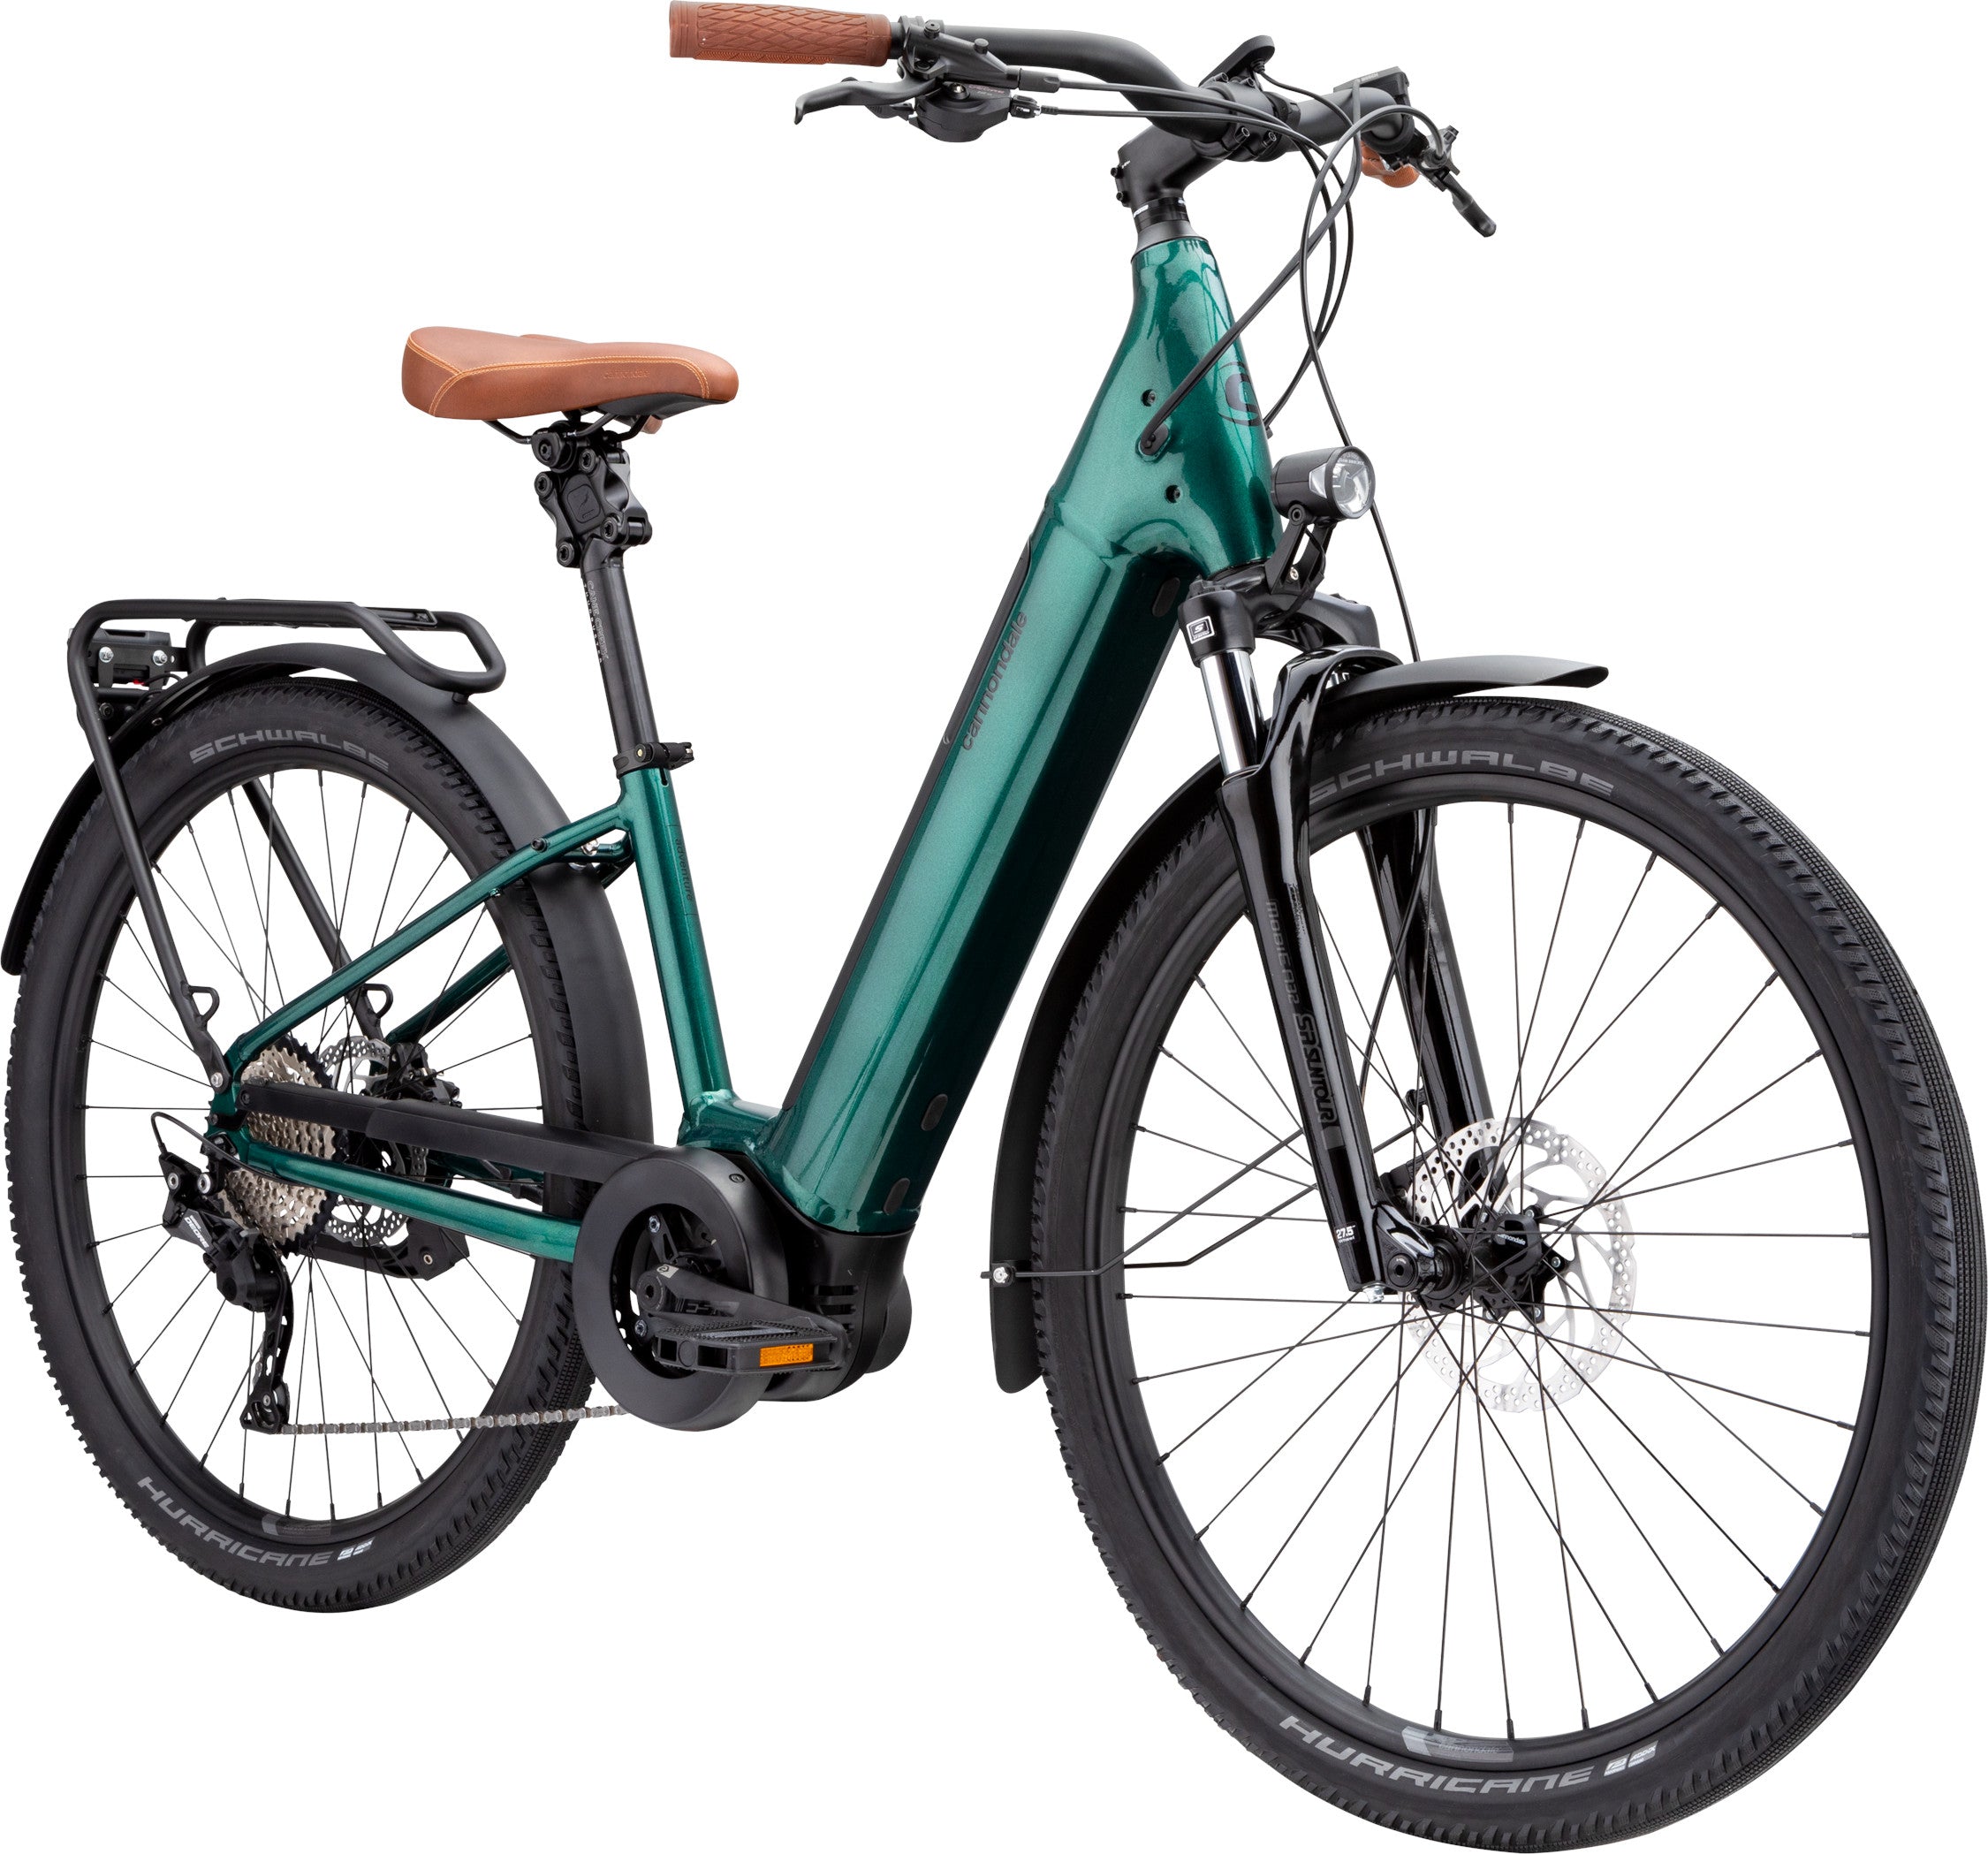 Cannondale Adventure Neo 1 EQ Electric Urban Bike - Emerald